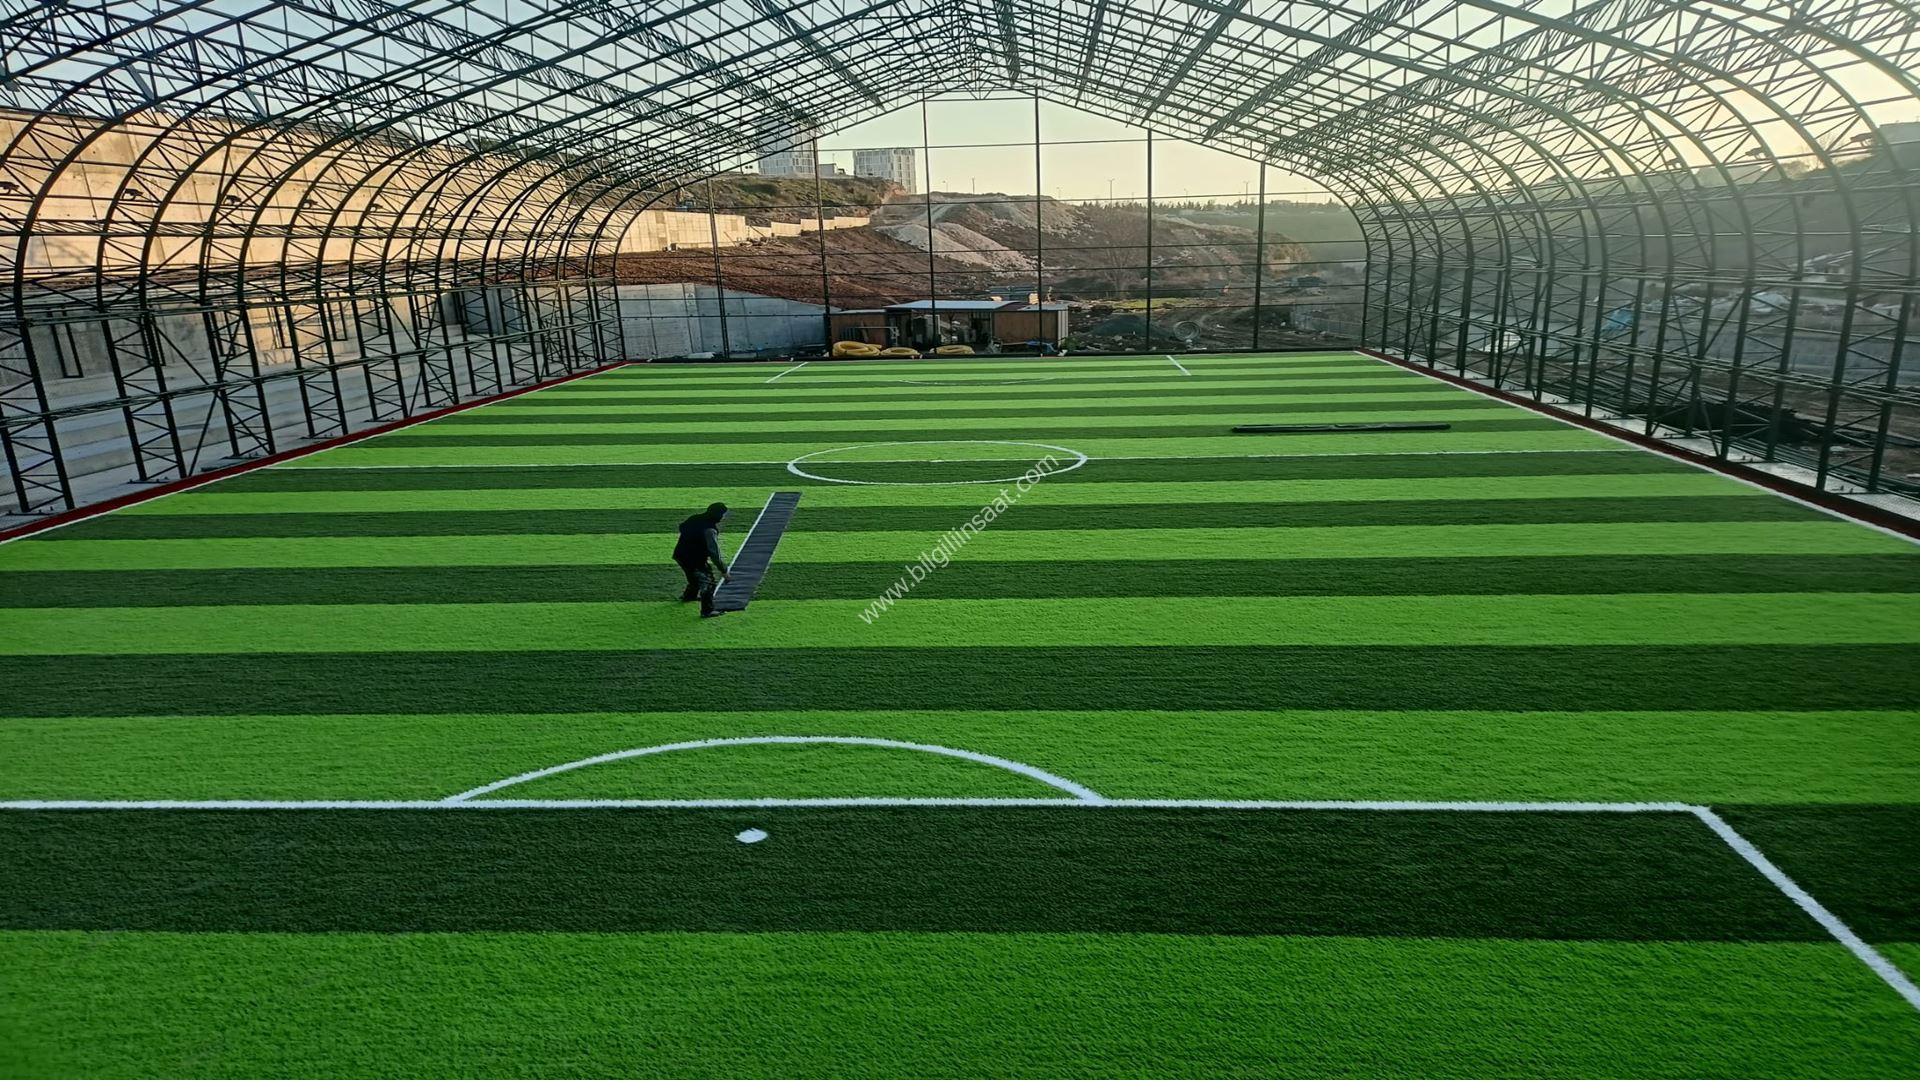 Başakşehir Municipality Indoor Football Field Construction Project